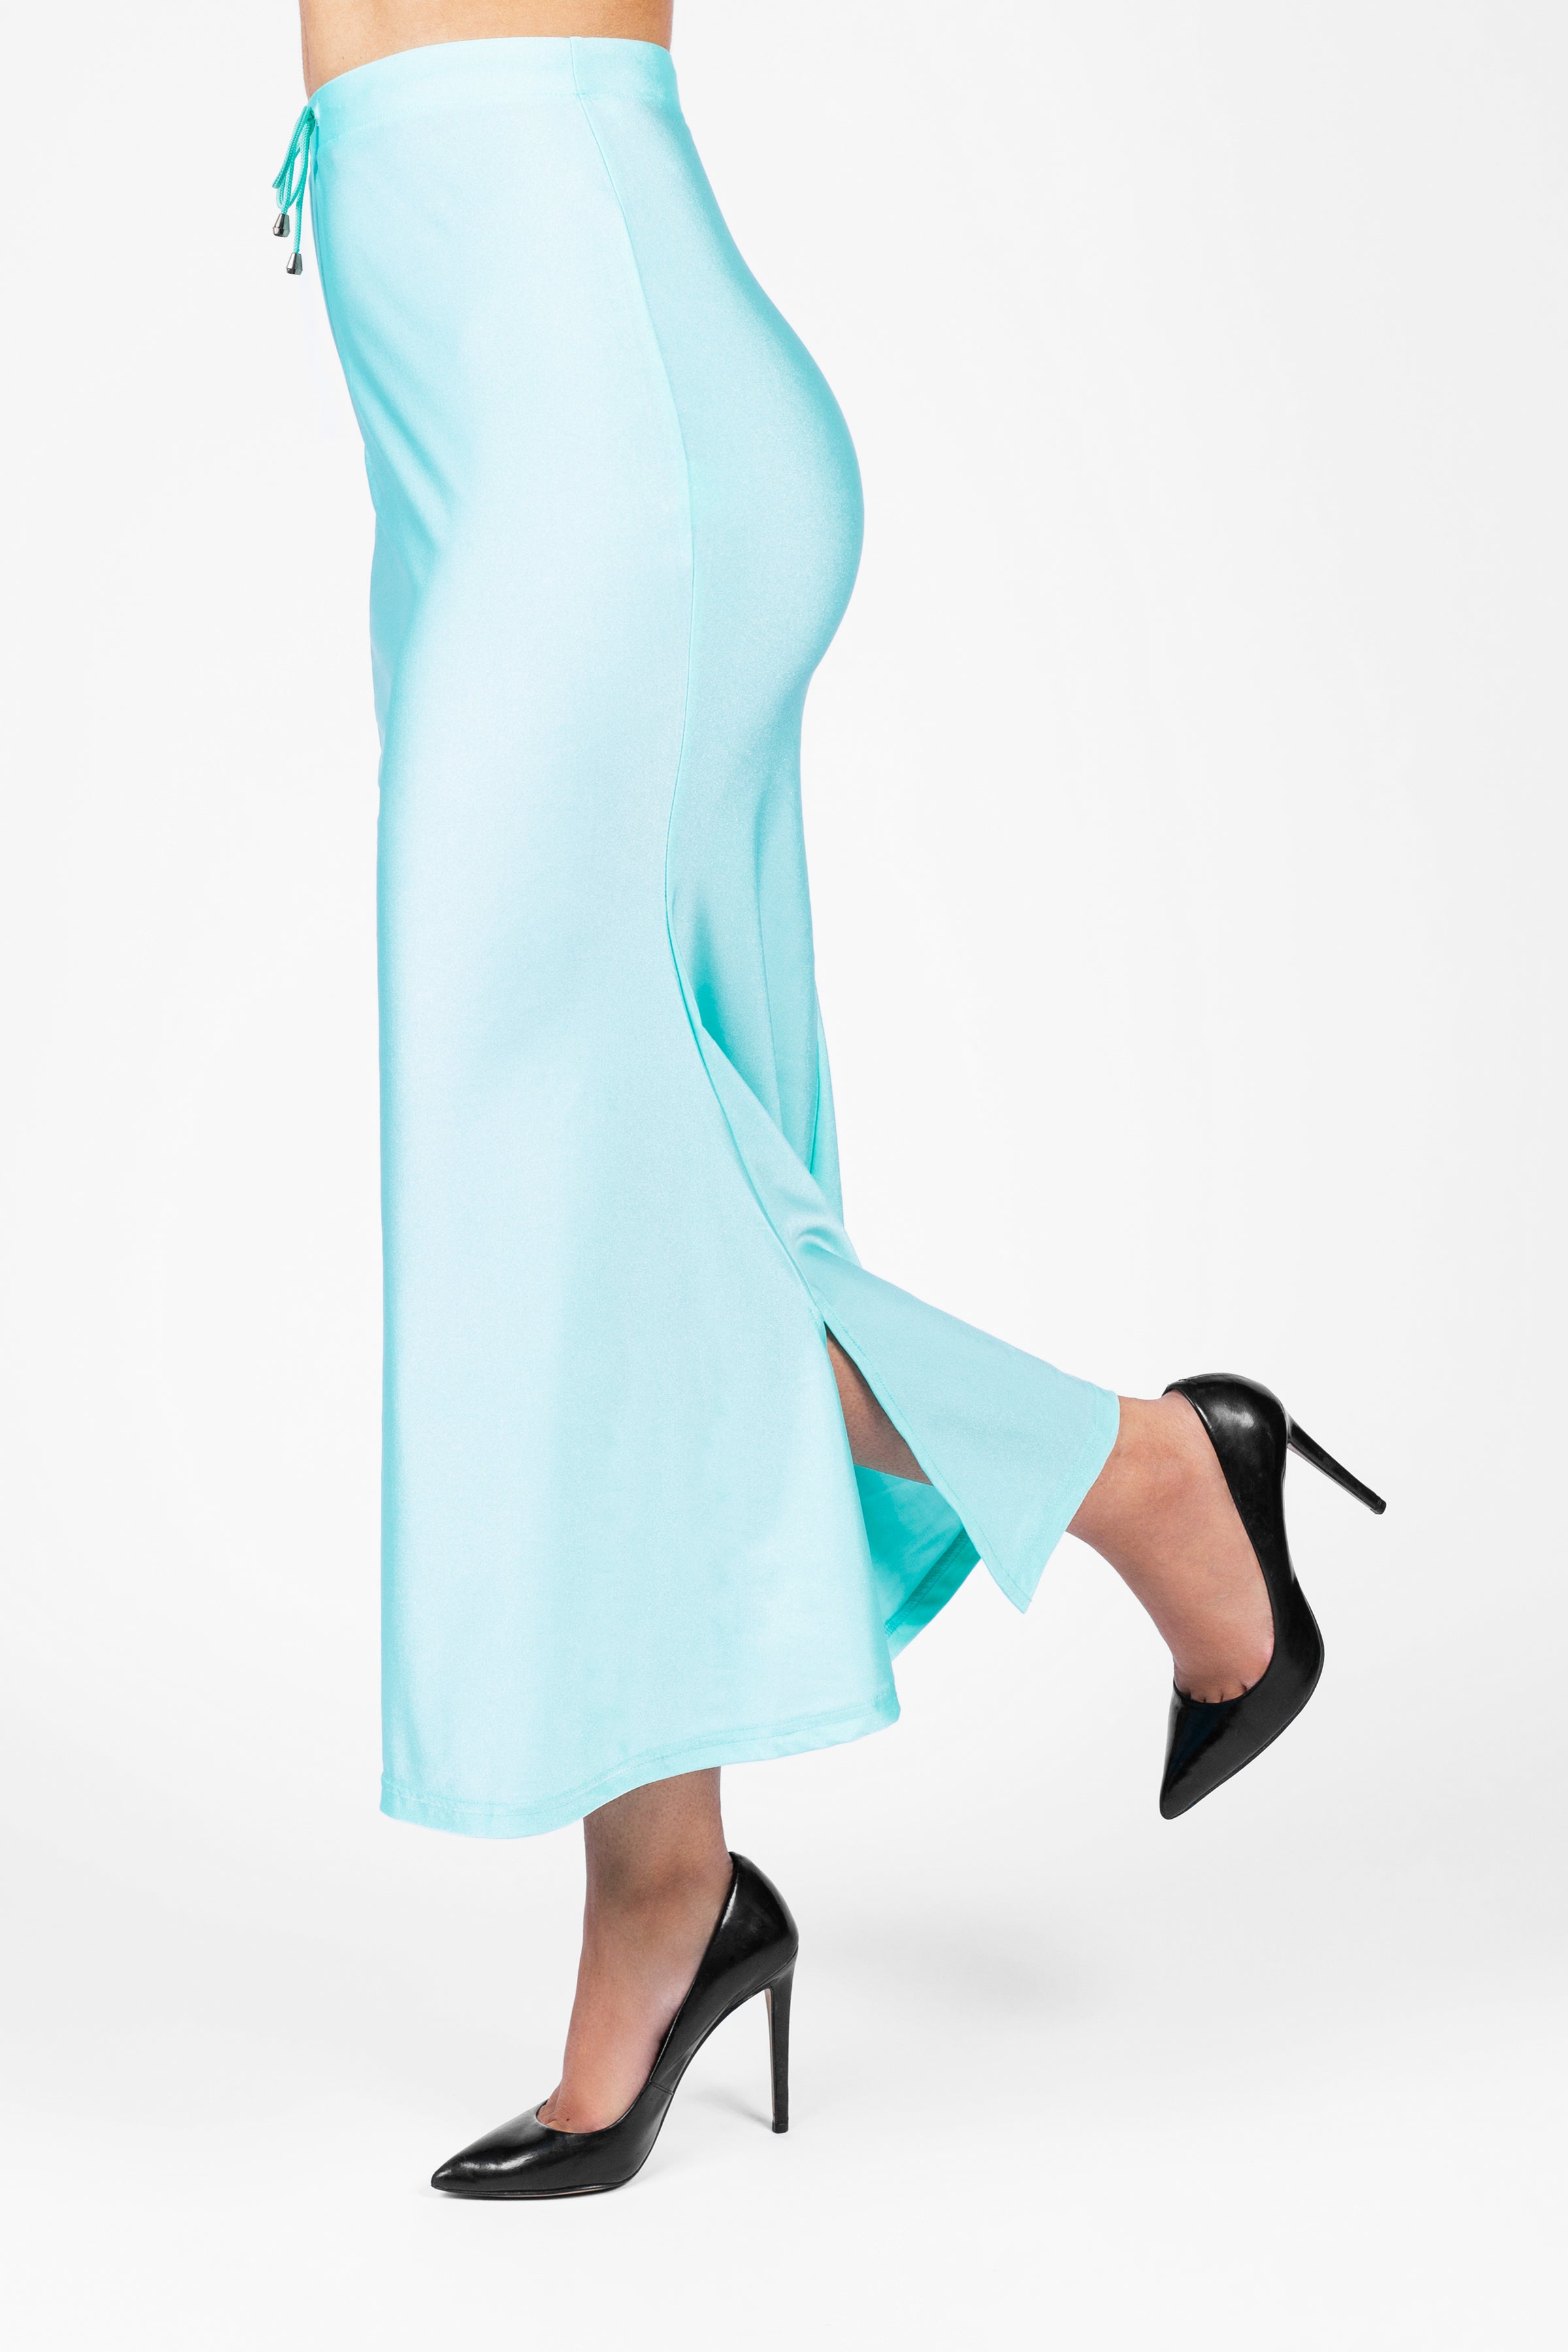 Buy BUYONN Women Light Blue Spandex Saree Shapewear (L) Online at